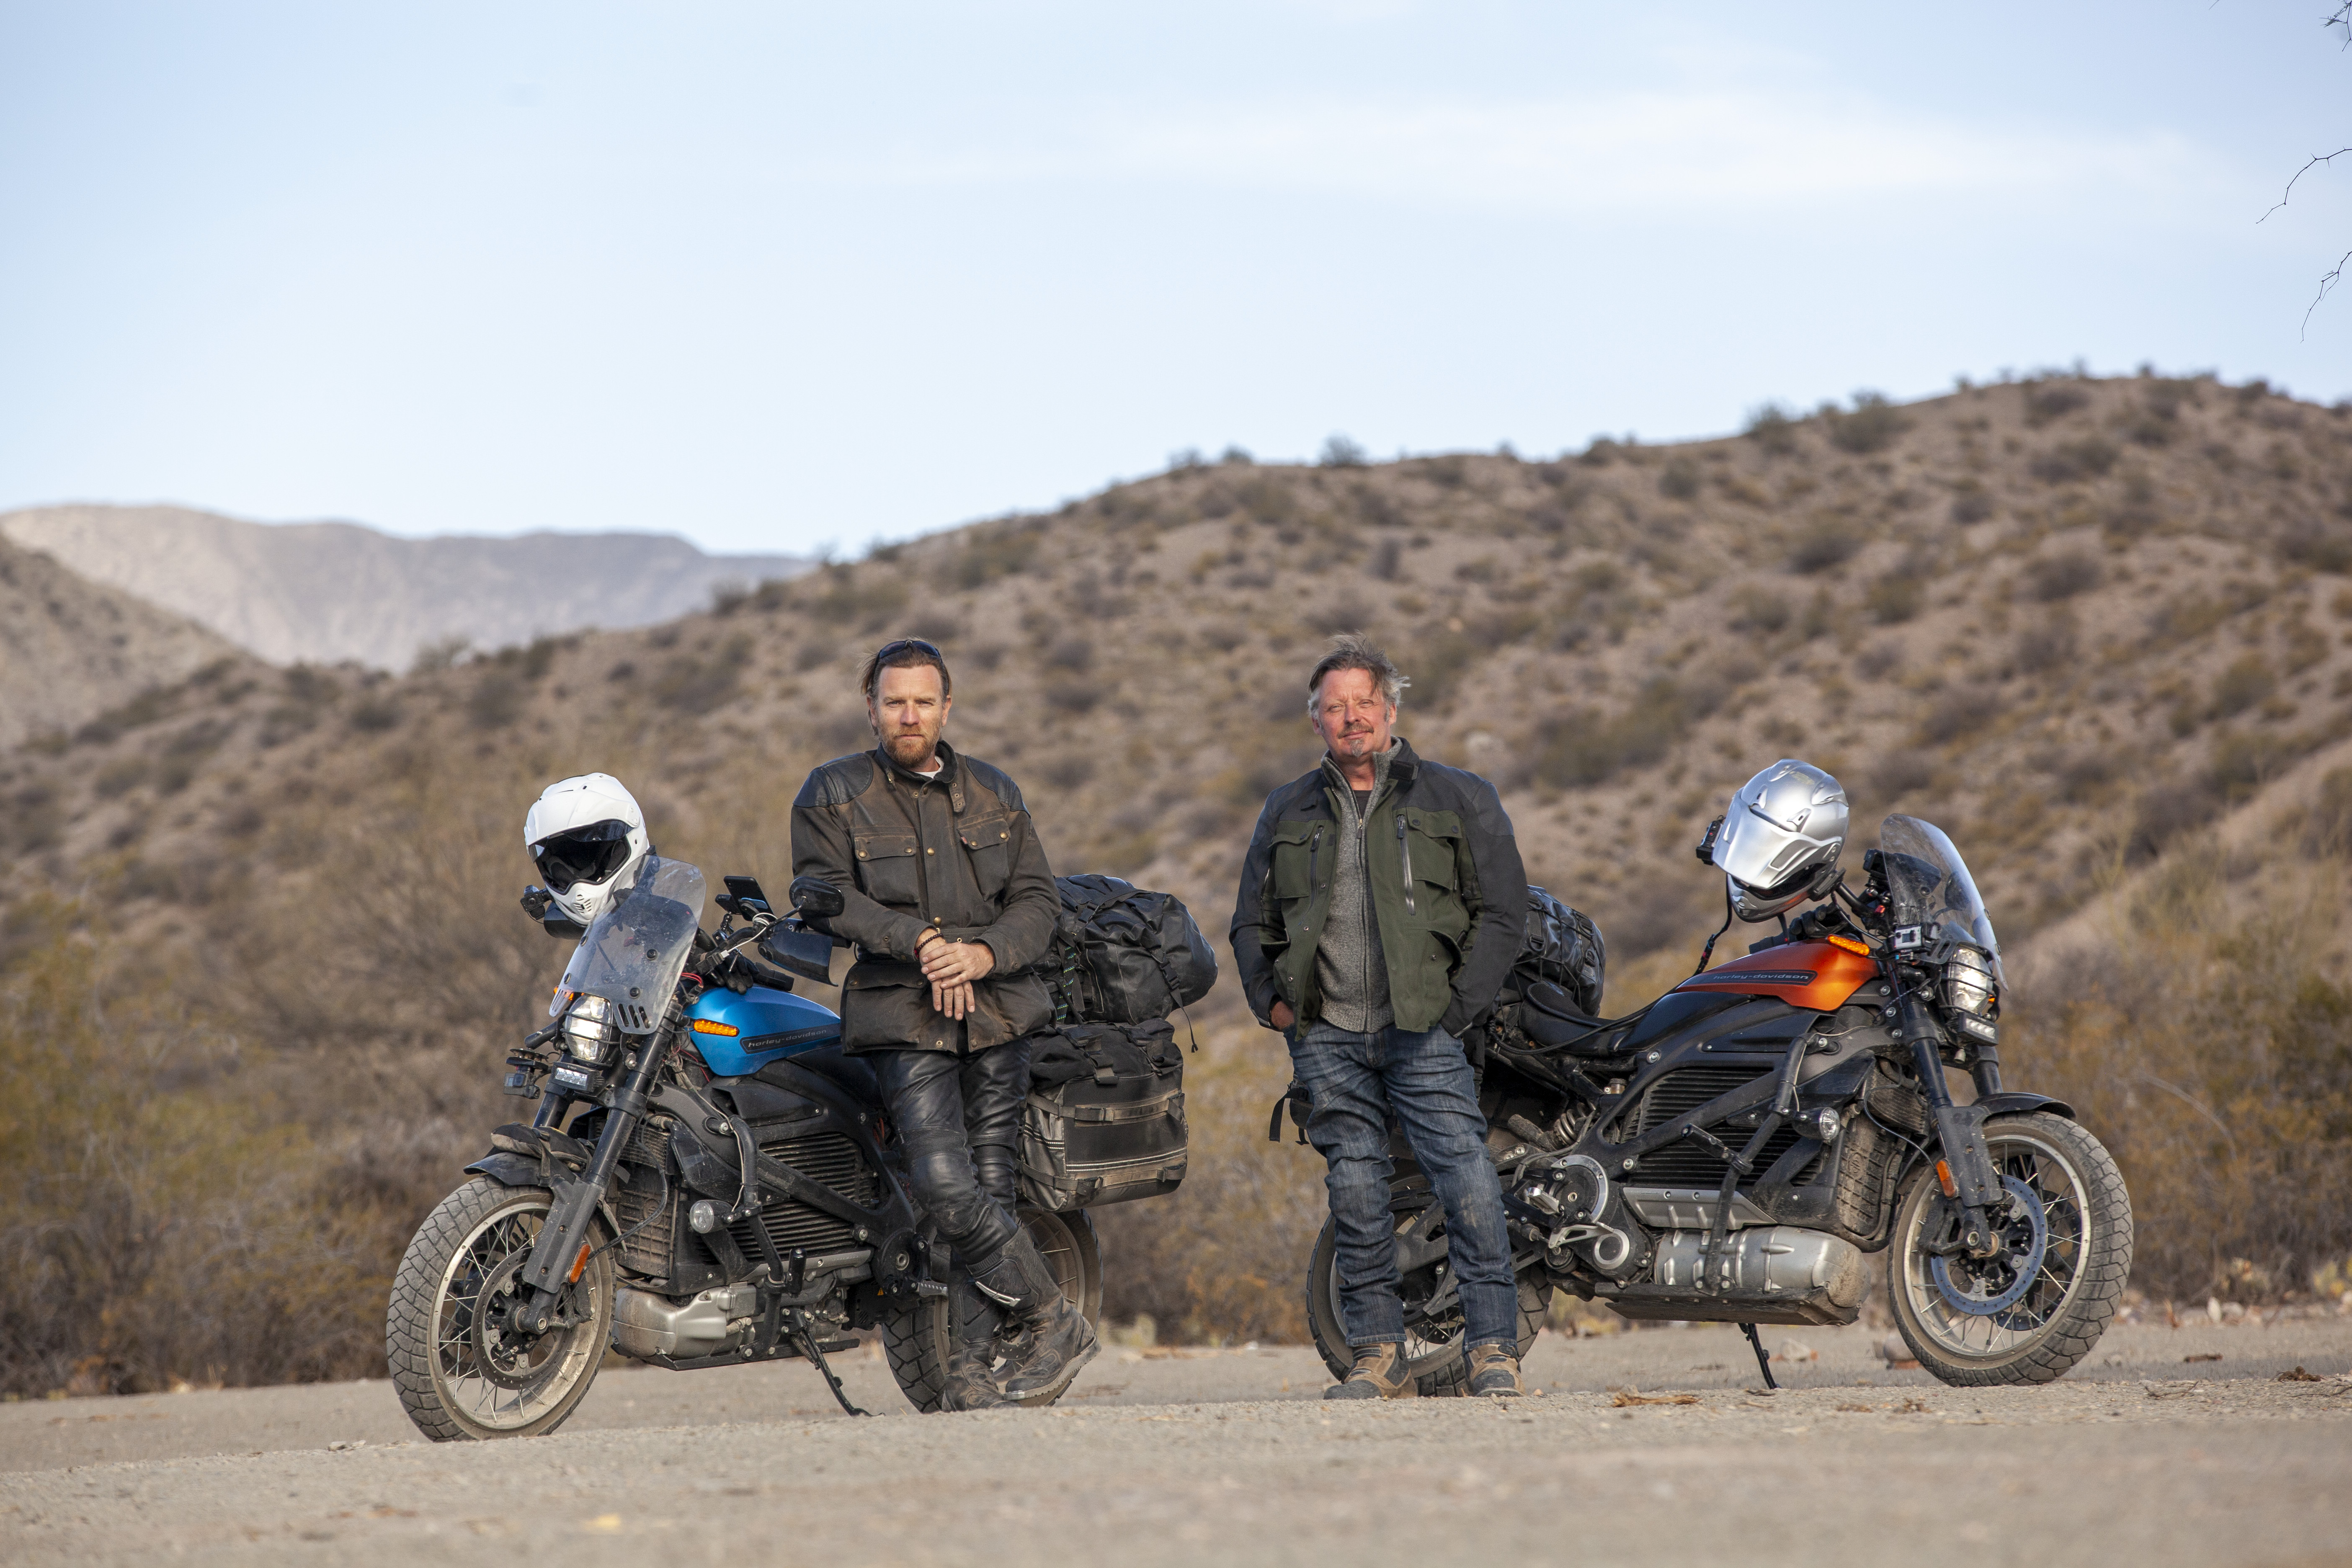 Ewan McGregor and Charley Boorman on electric motorcycle roadtrip